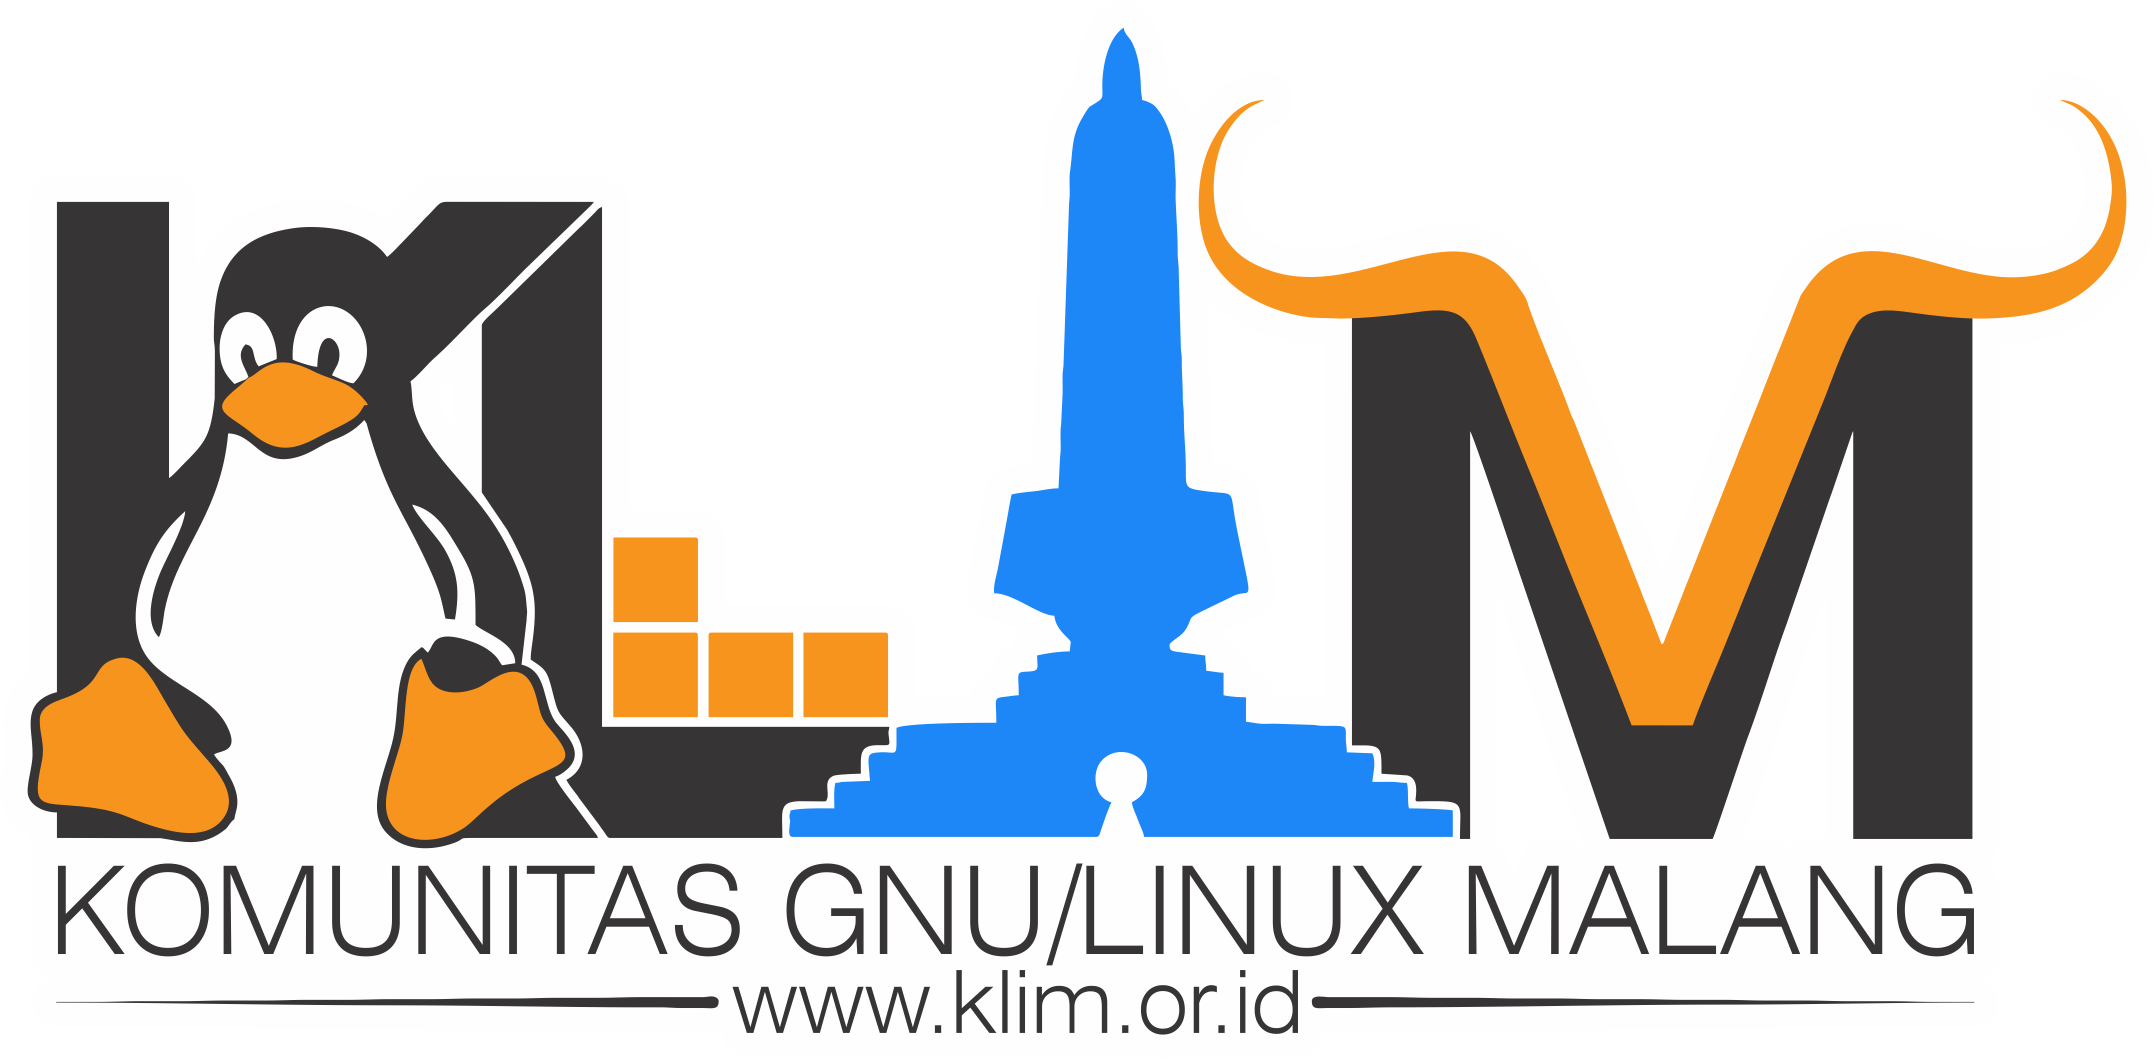 Komunitas GNU/Linux Malang